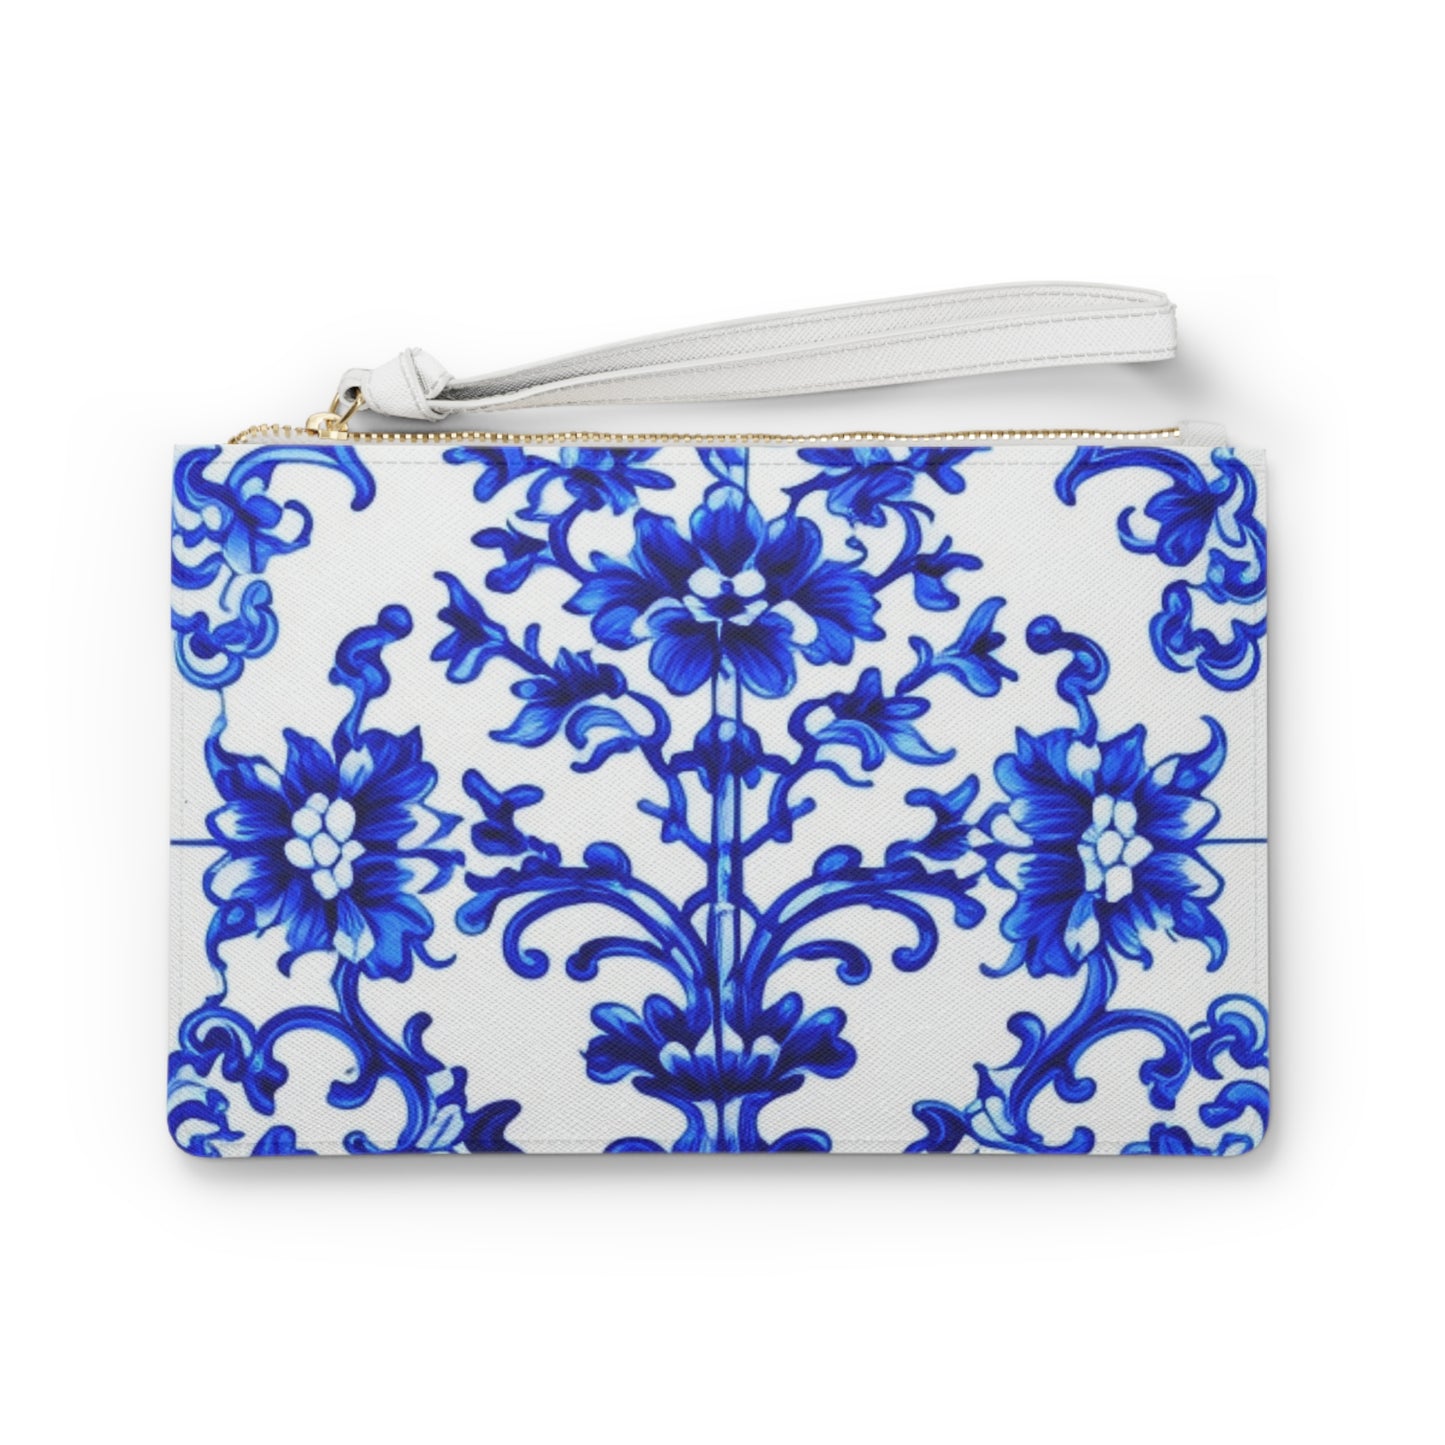 Portuguese Blue and White Tile Pattern Errands Makeup Evening Pouch Clutch Bag